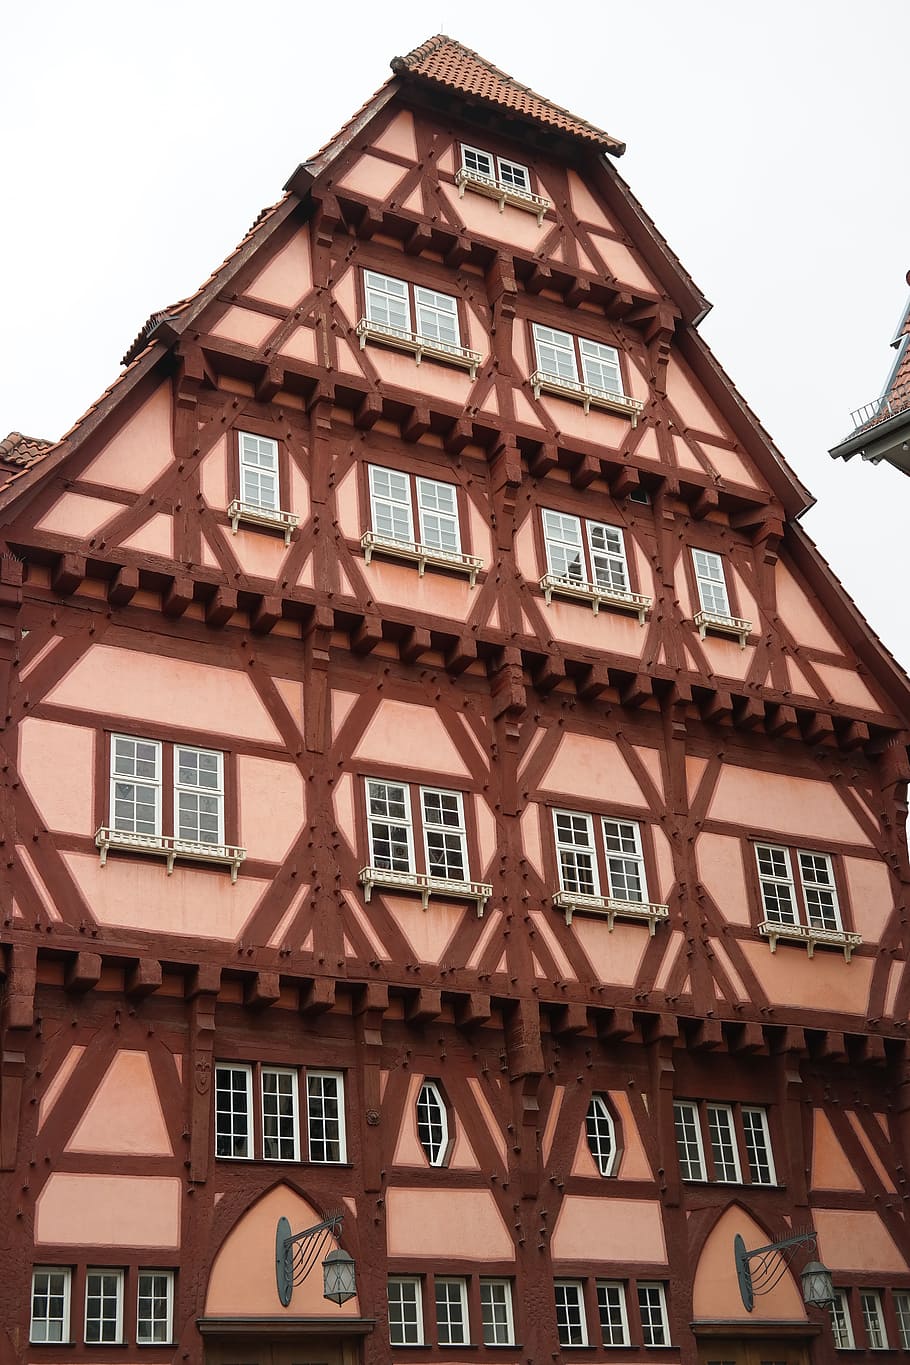 Esslingen, Old Town, fachwerkhäuser, truss, architecture, timber framed building, facade, historically, building, marketplace